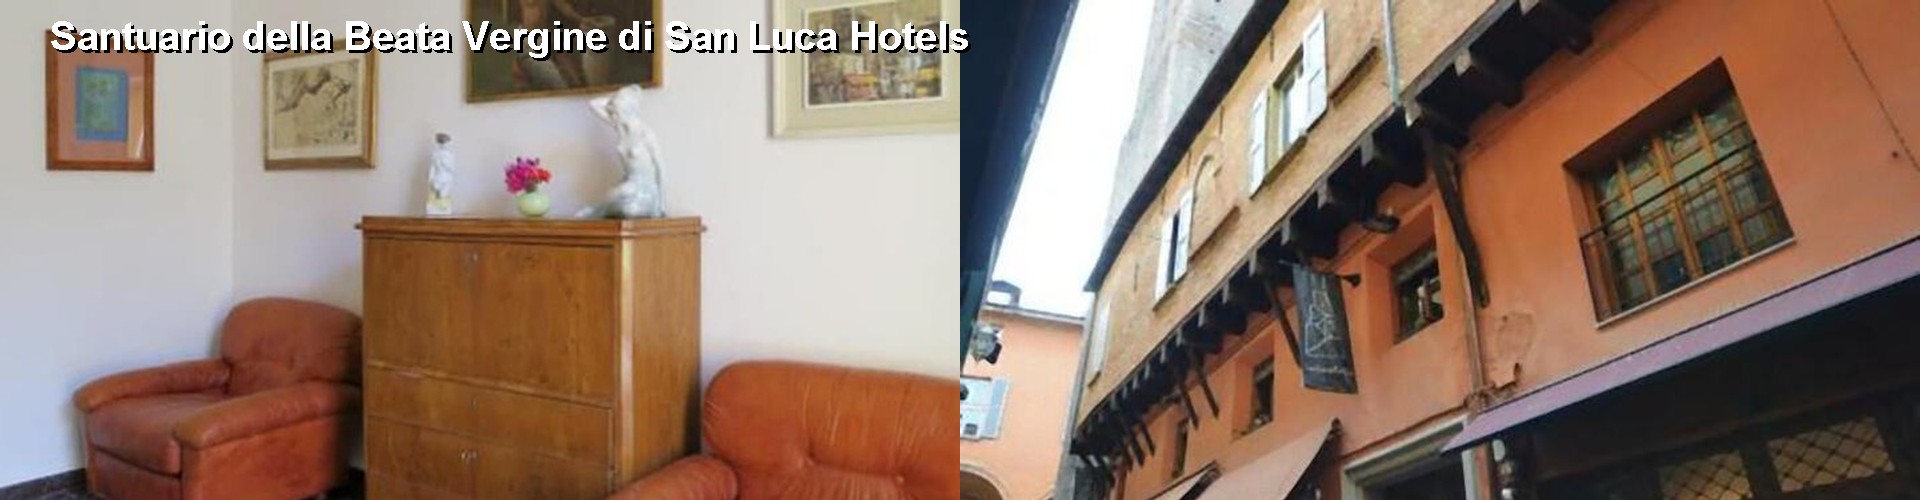 5 Best Hotels near Santuario della Beata Vergine di San Luca